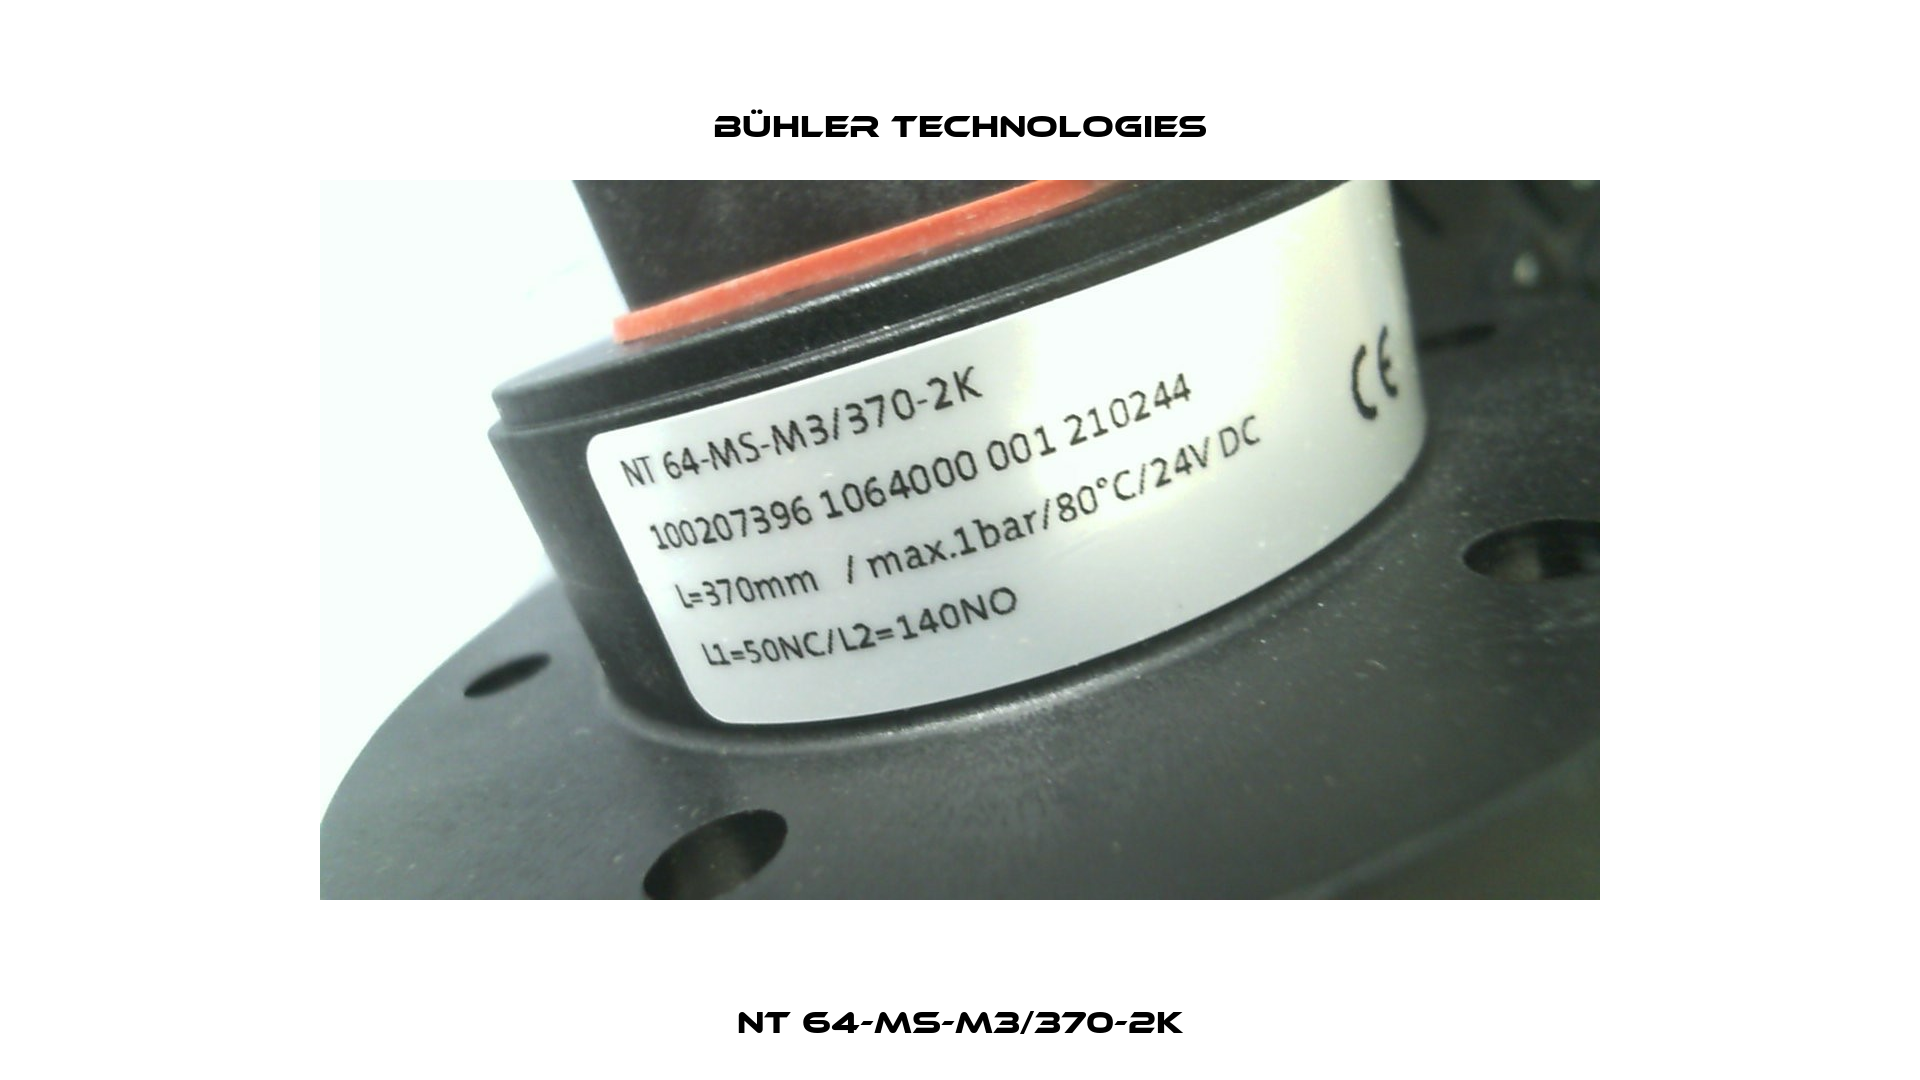 NT 64-MS-M3/370-2K Bühler Technologies